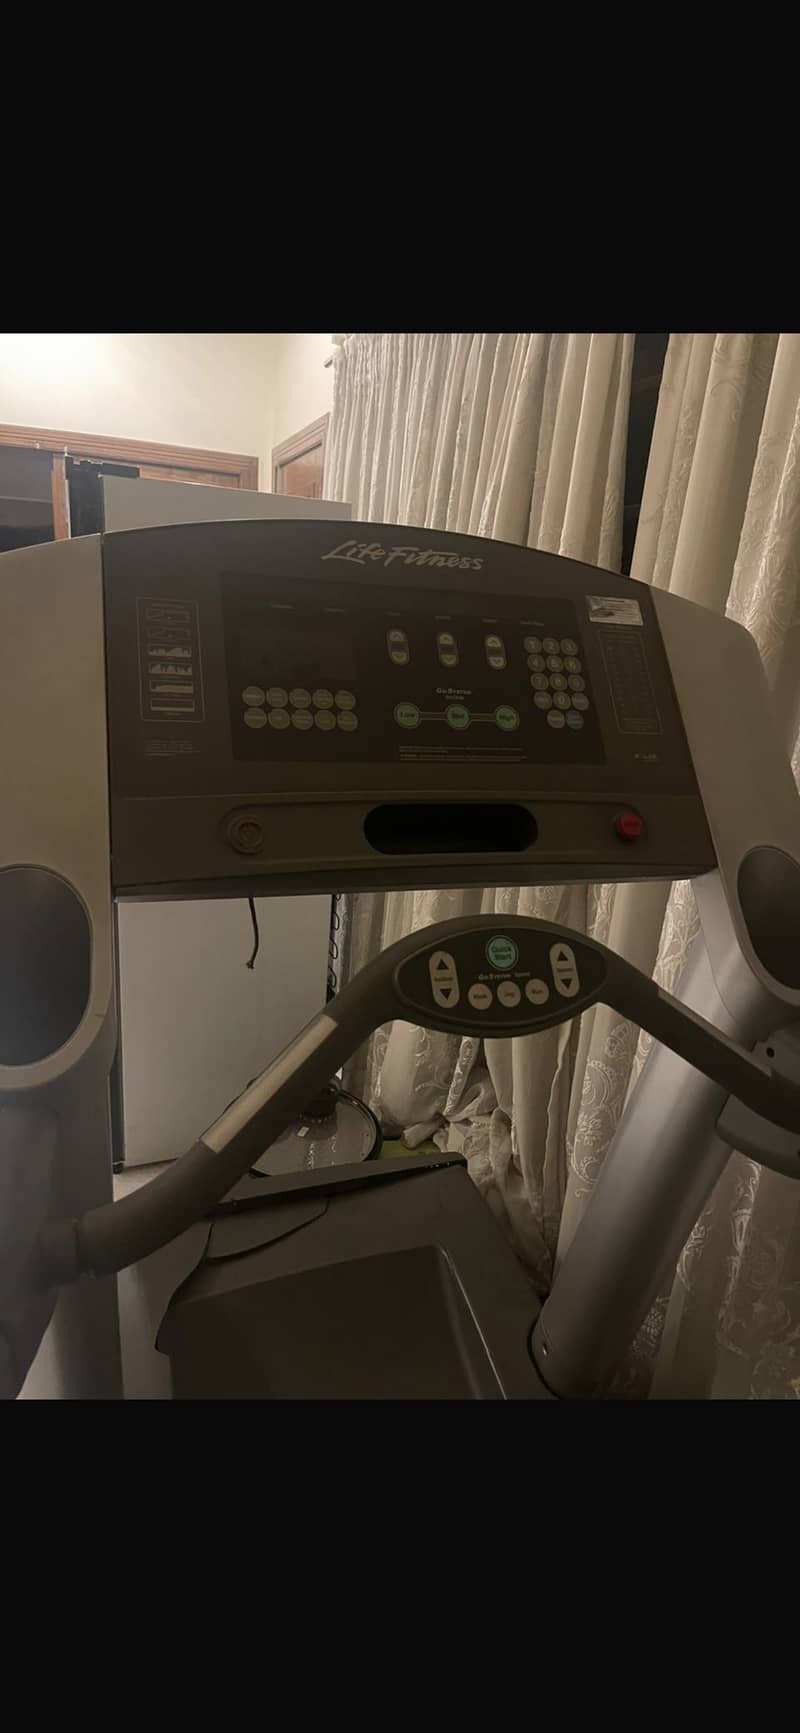 Life fitness treadmill 1